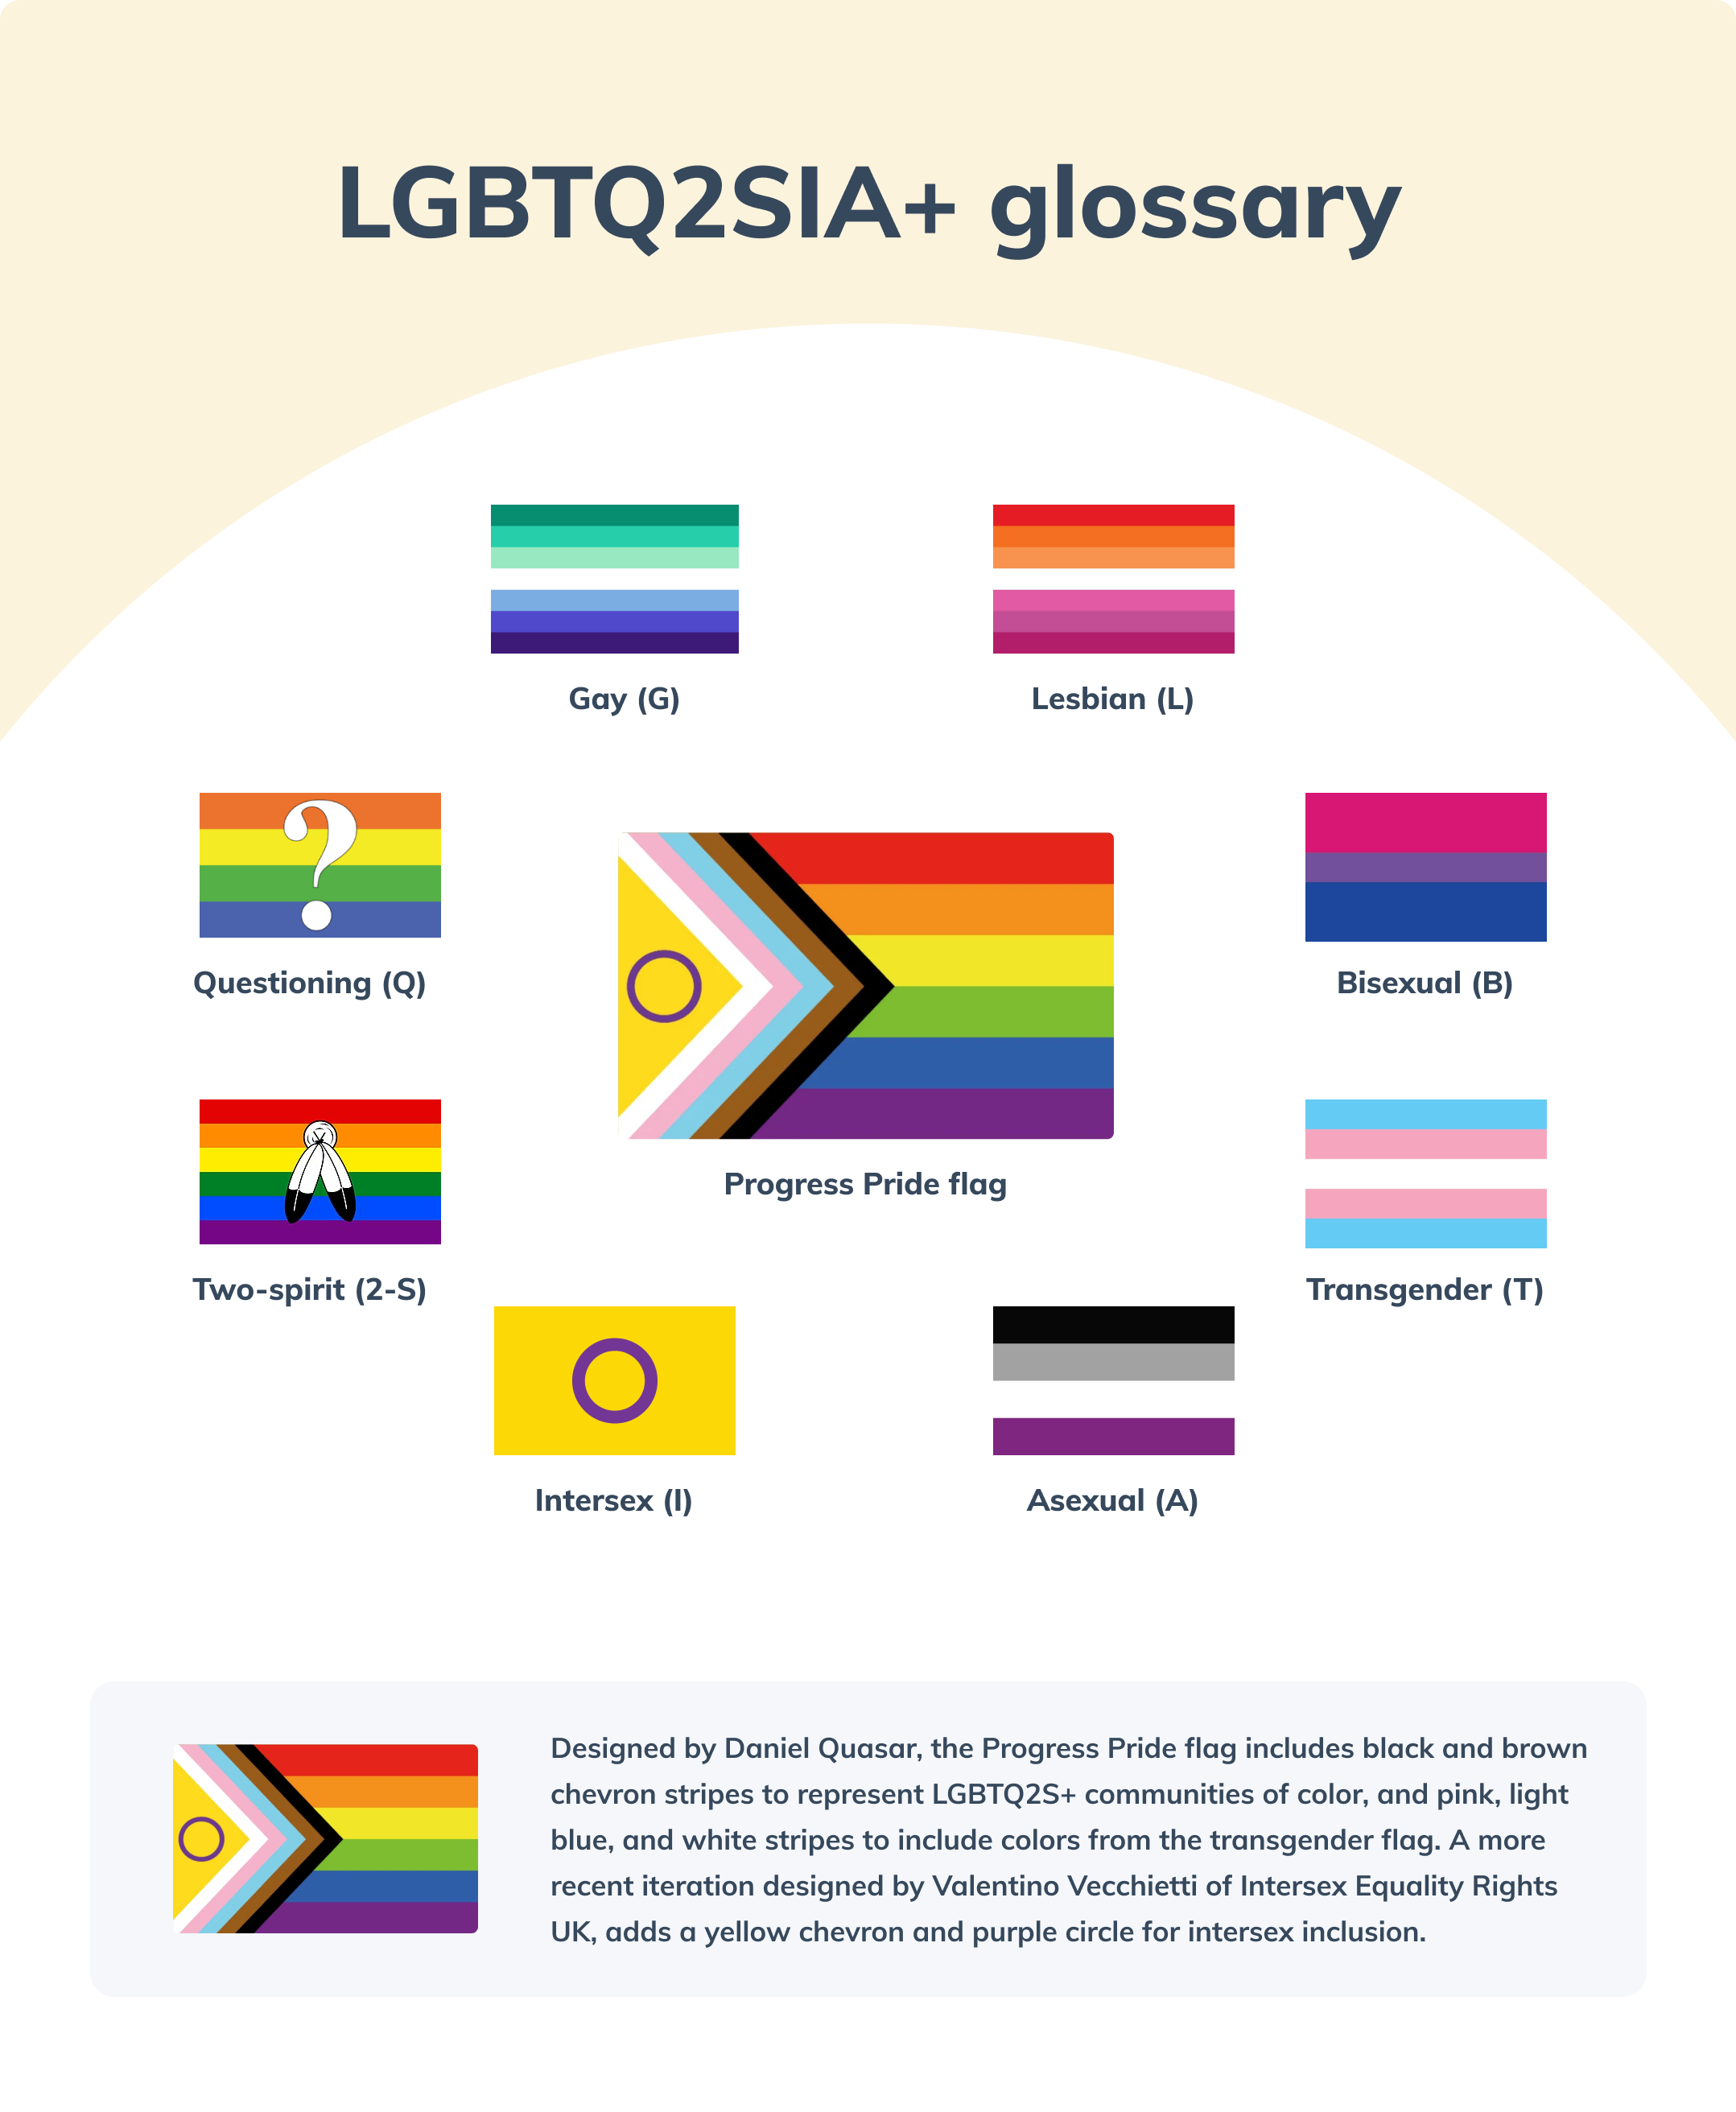 caring for lgbtq patients LGBTQ2SIA glossary